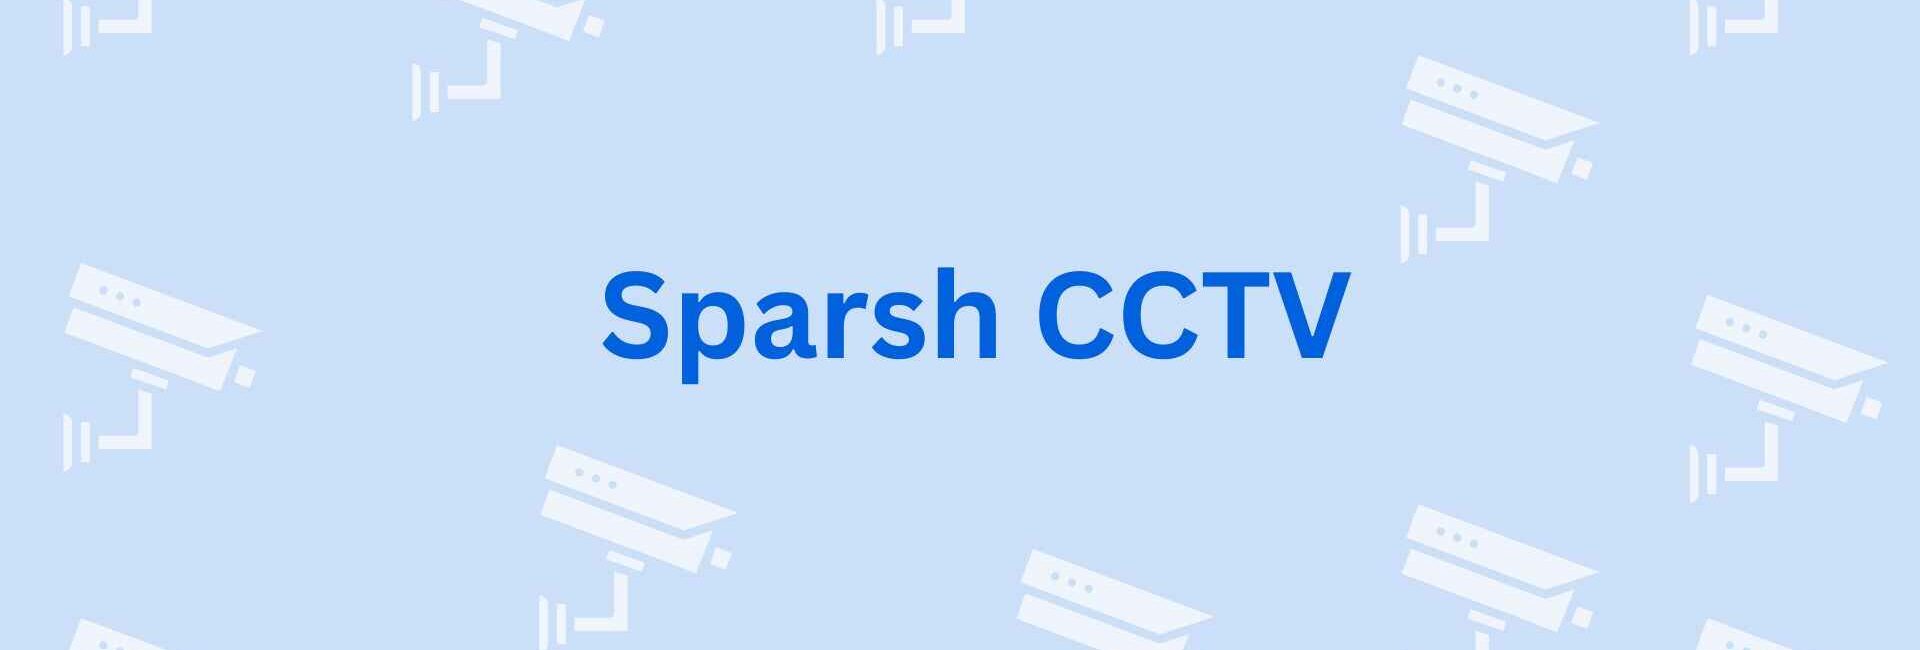 Sparsh CCTV - CCTV Dealer in Noida